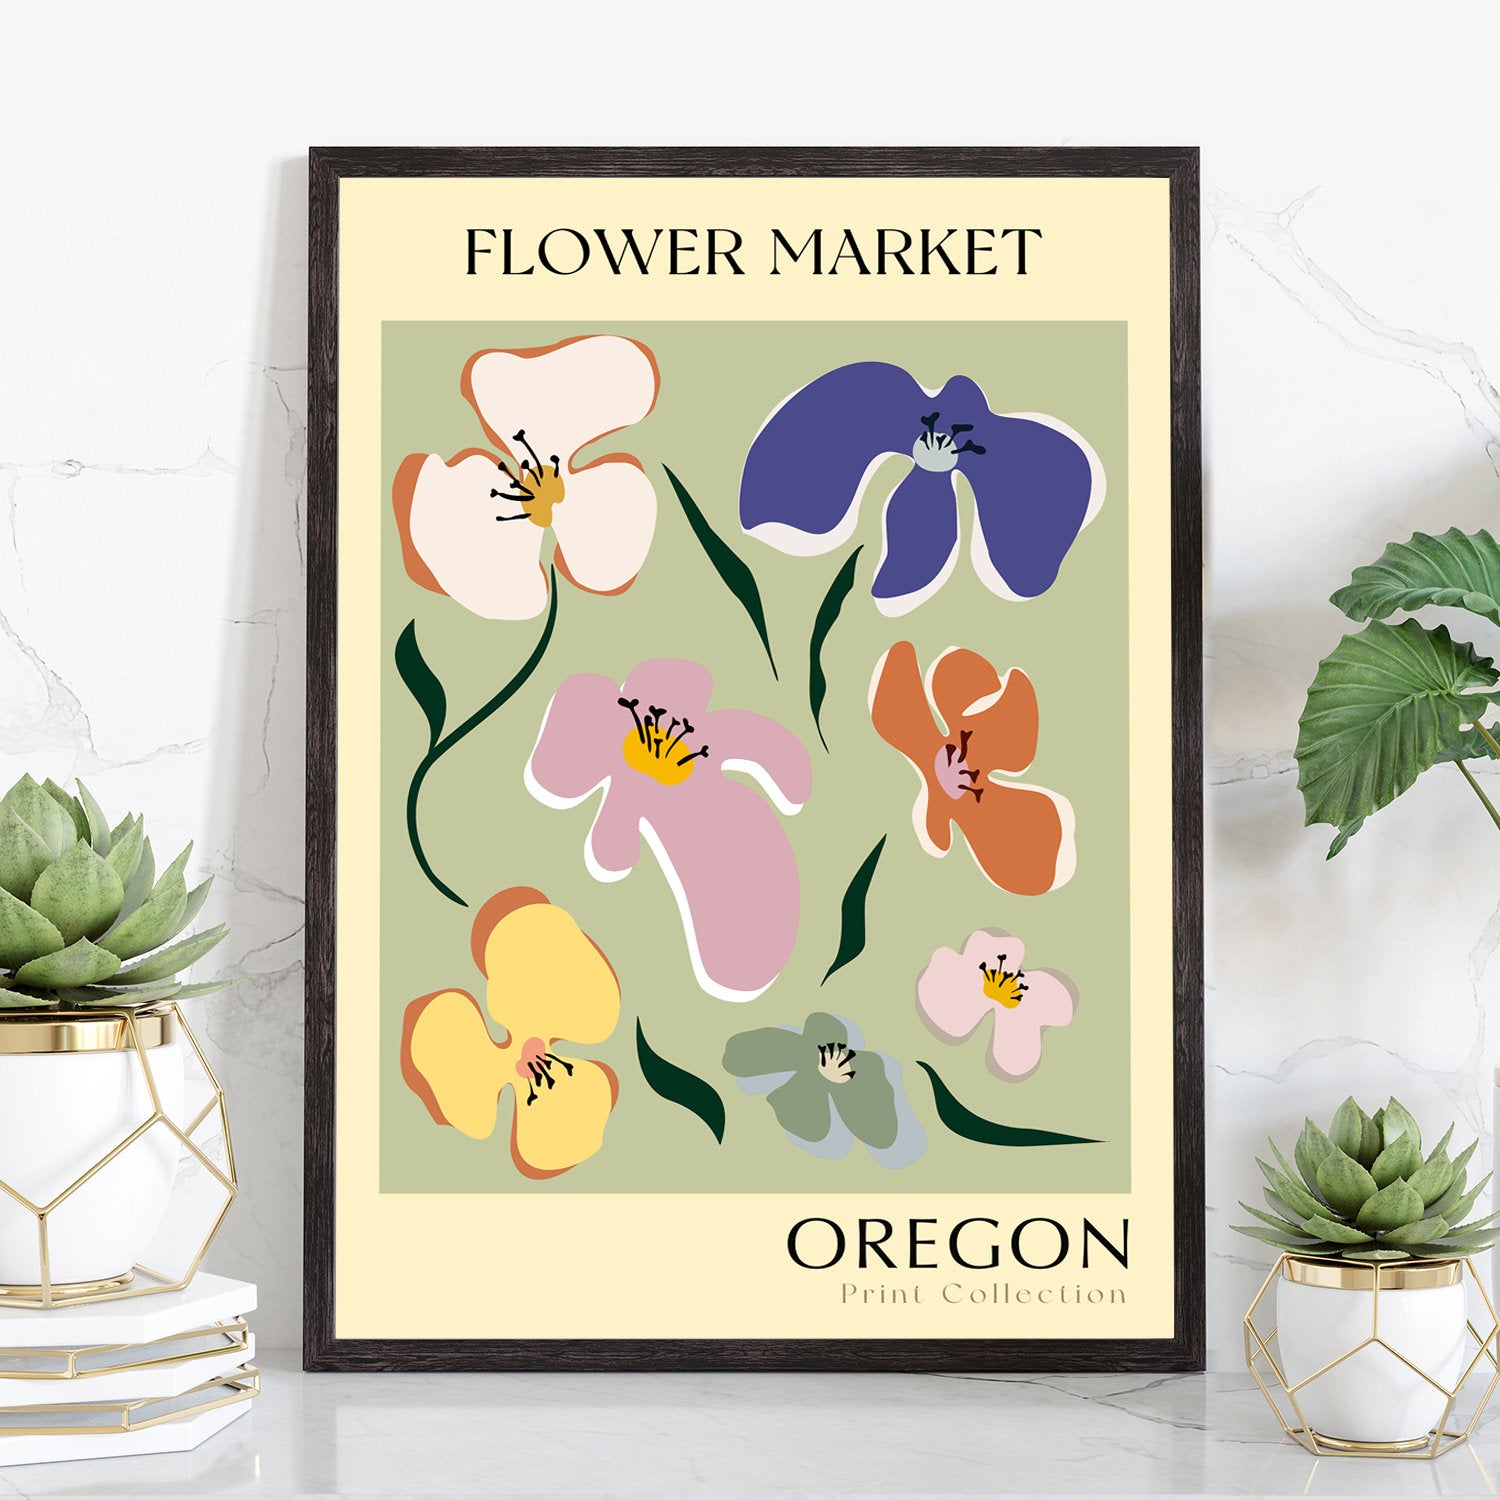 Oregon State flower print, USA states poster, Oregon flower market poster, Botanical posters, Nature poster artwork, Boho floral wall art